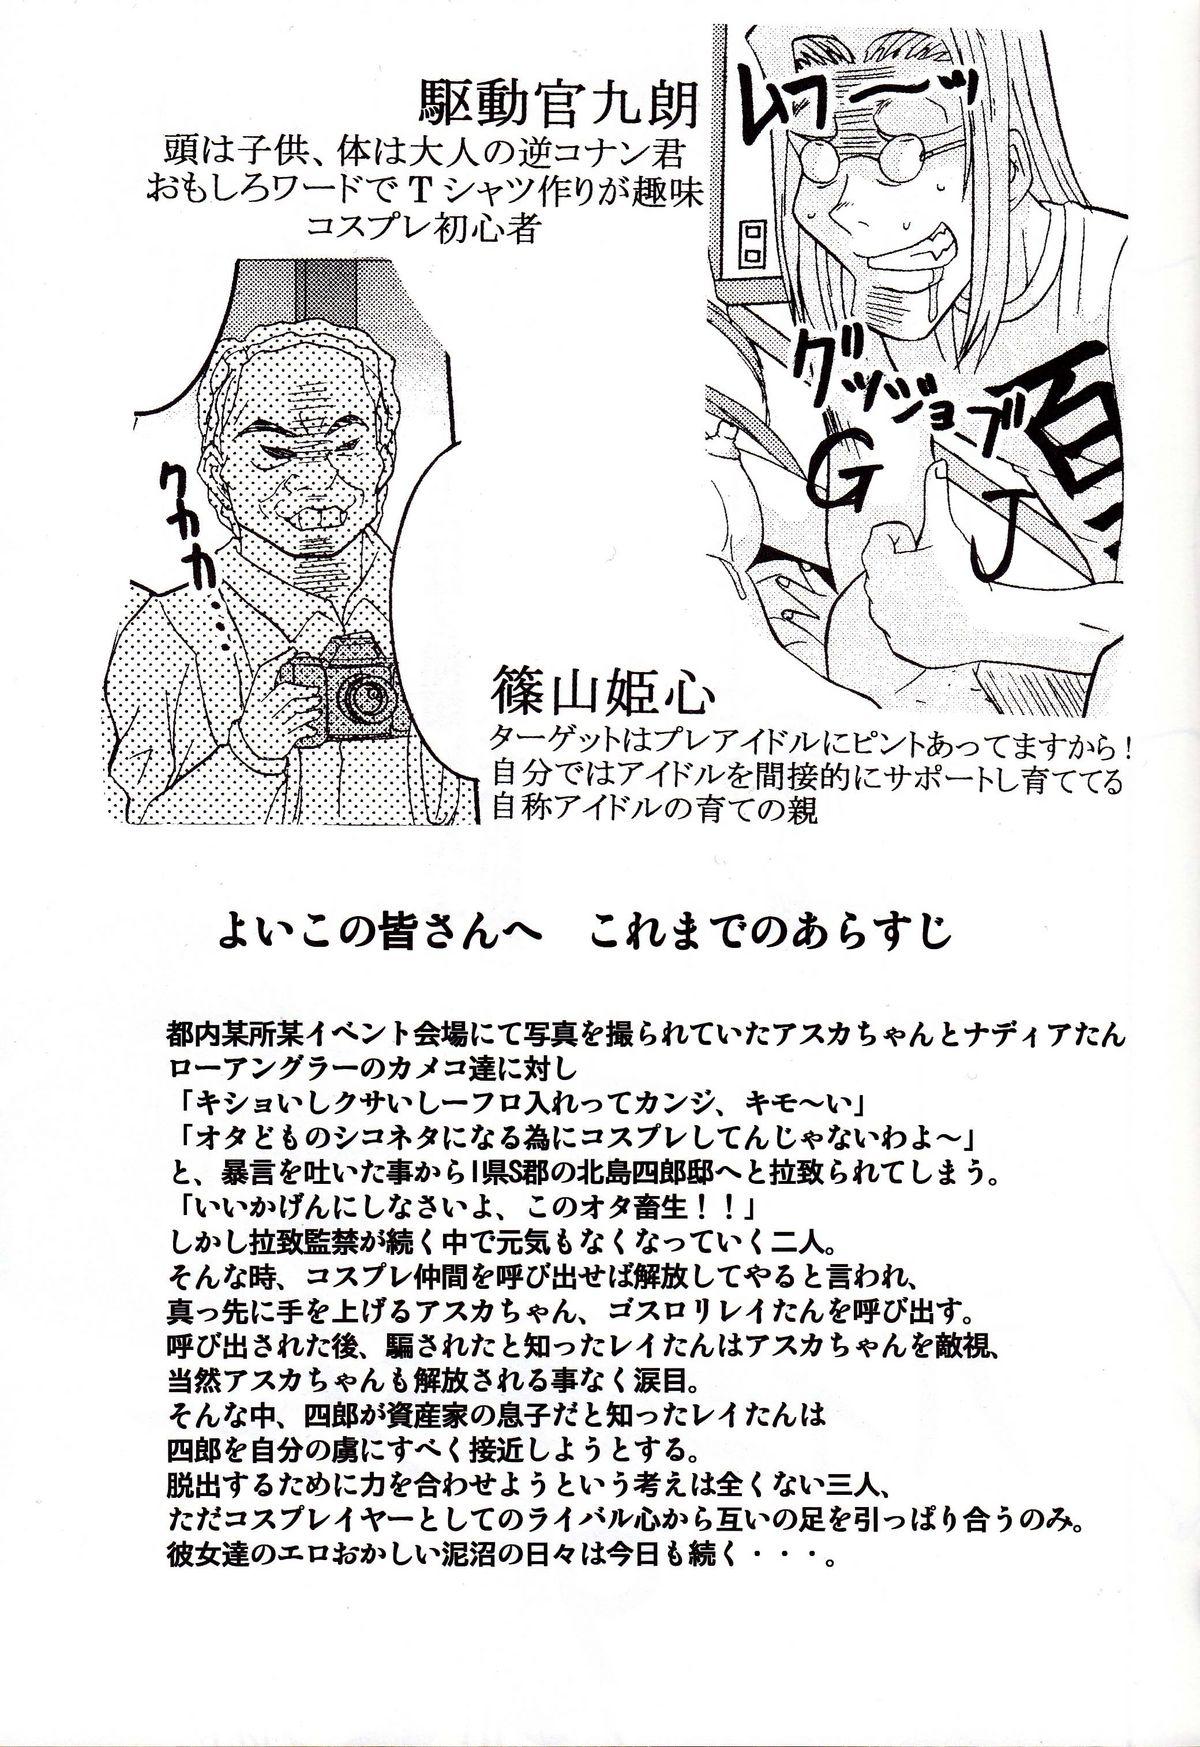 Celebrity Hi Energy 9 - Neon genesis evangelion Fushigi no umi no nadia Twink - Page 6